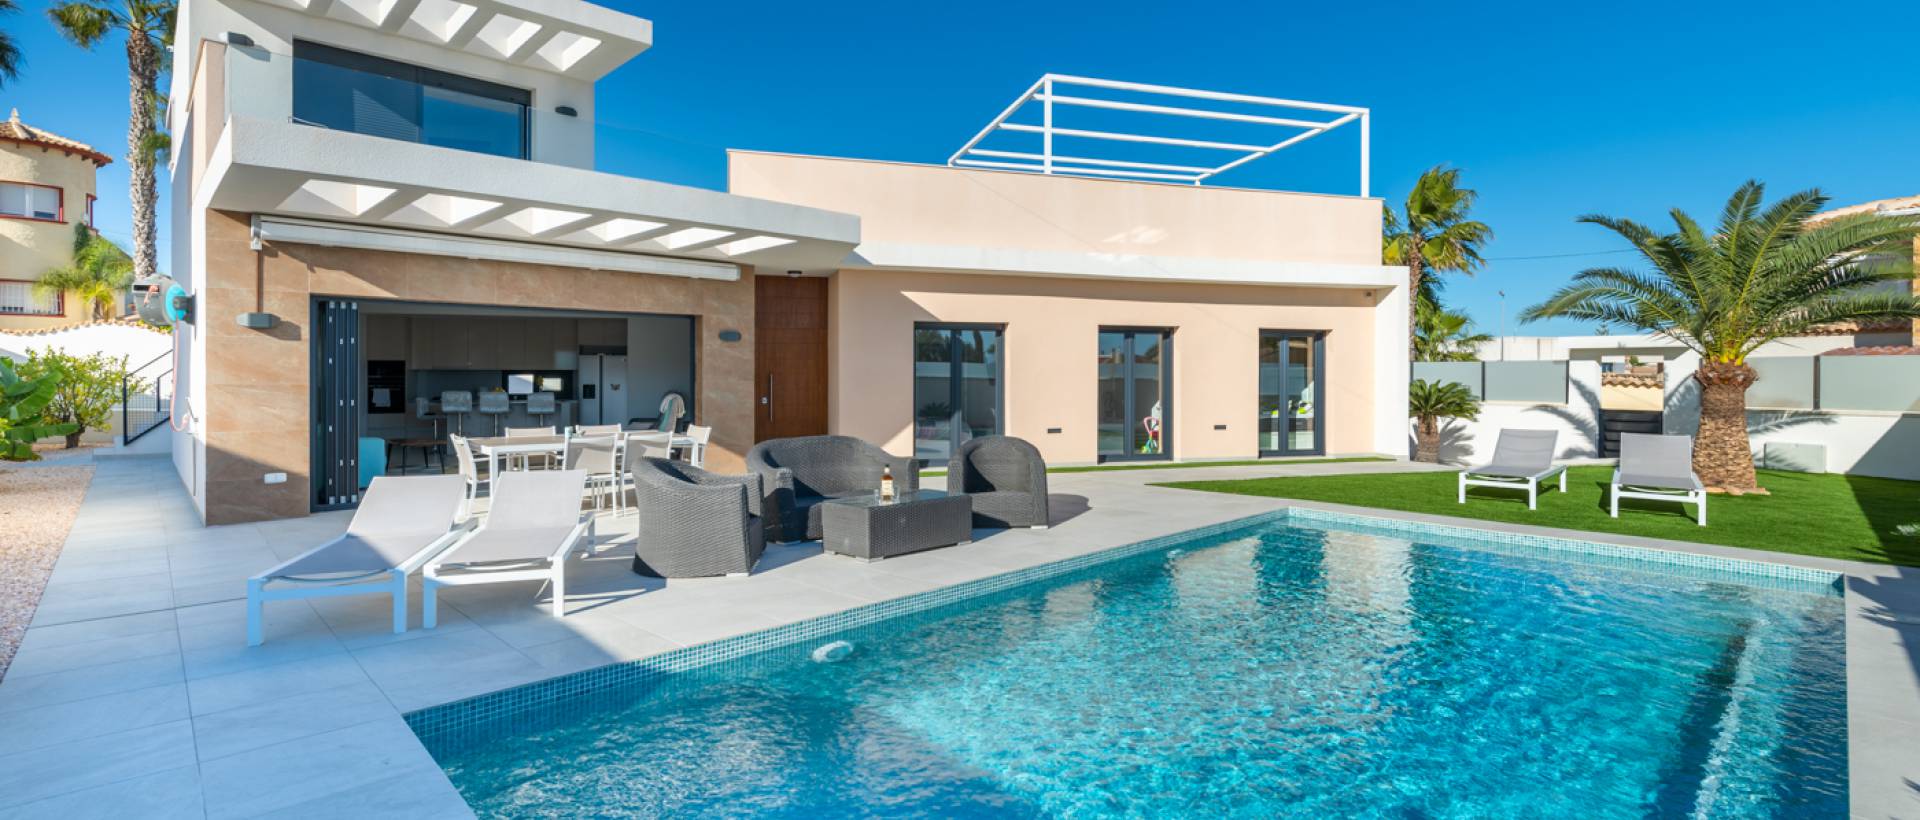 Swimming pool view-Swimming pool view-Beautiful; 4 Bedroom Villa for sale in Quesada